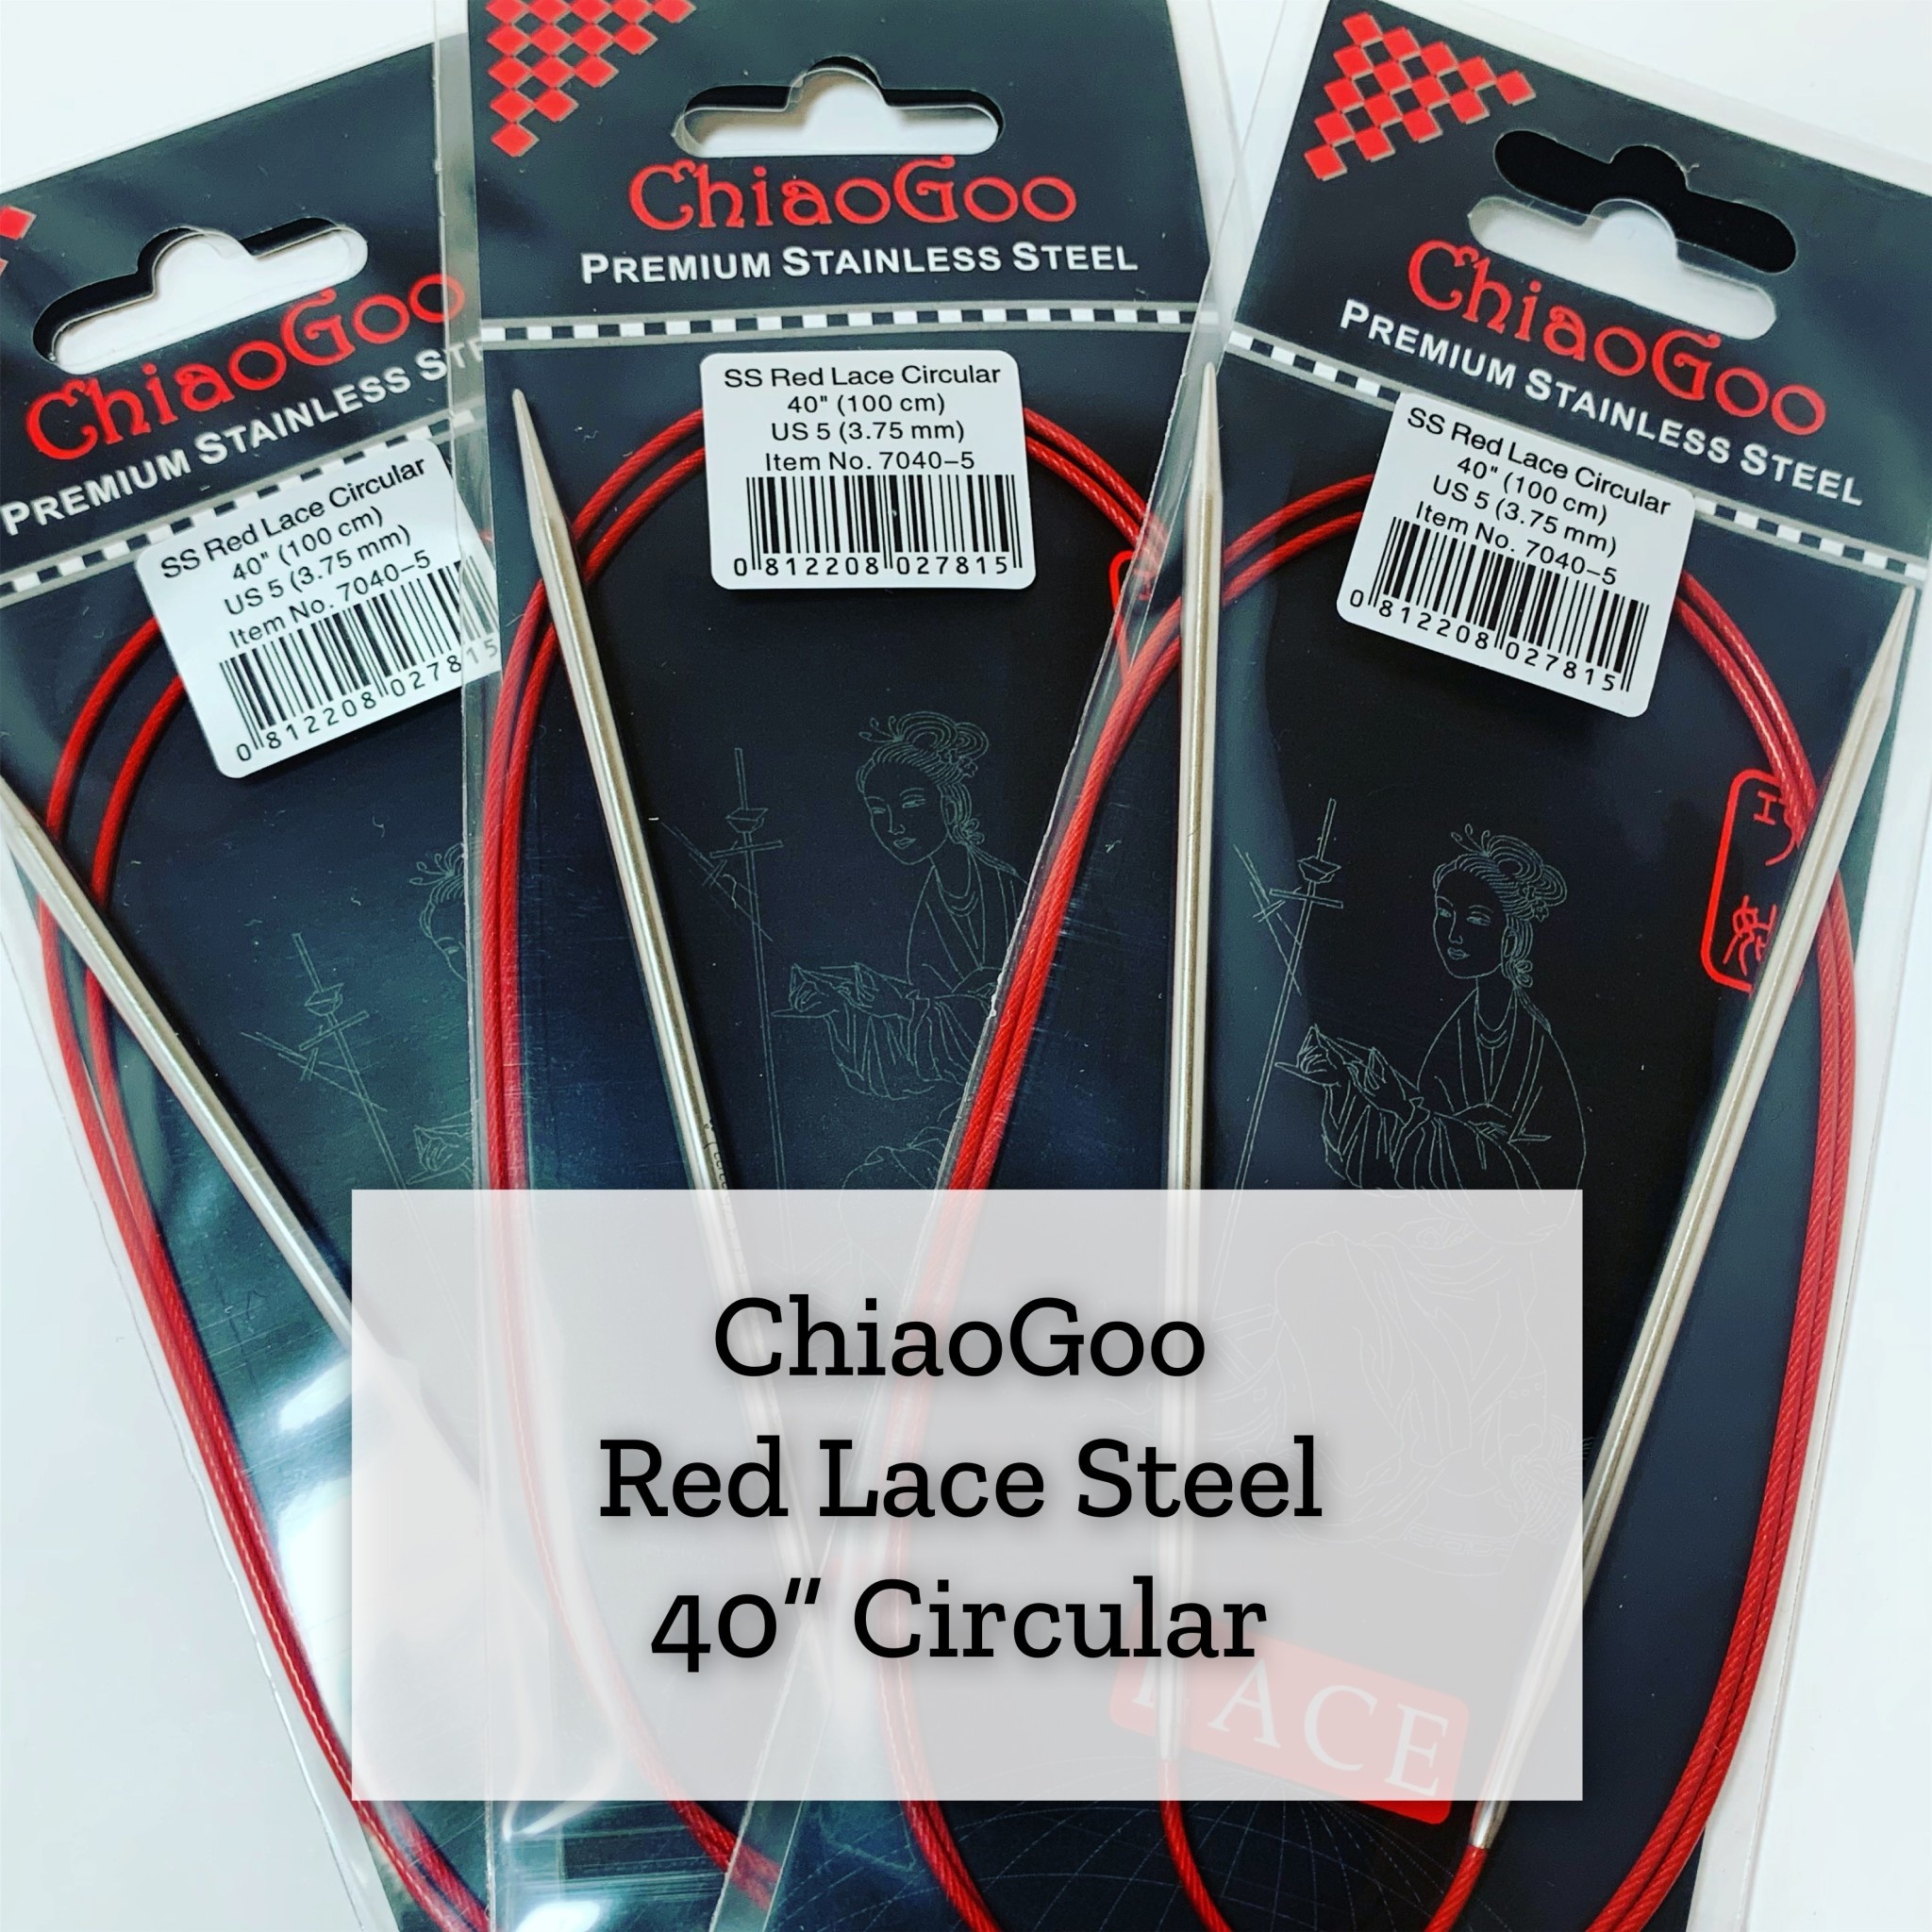 ChiaoGoo Red Lace Steel - 40" 2.5 mm